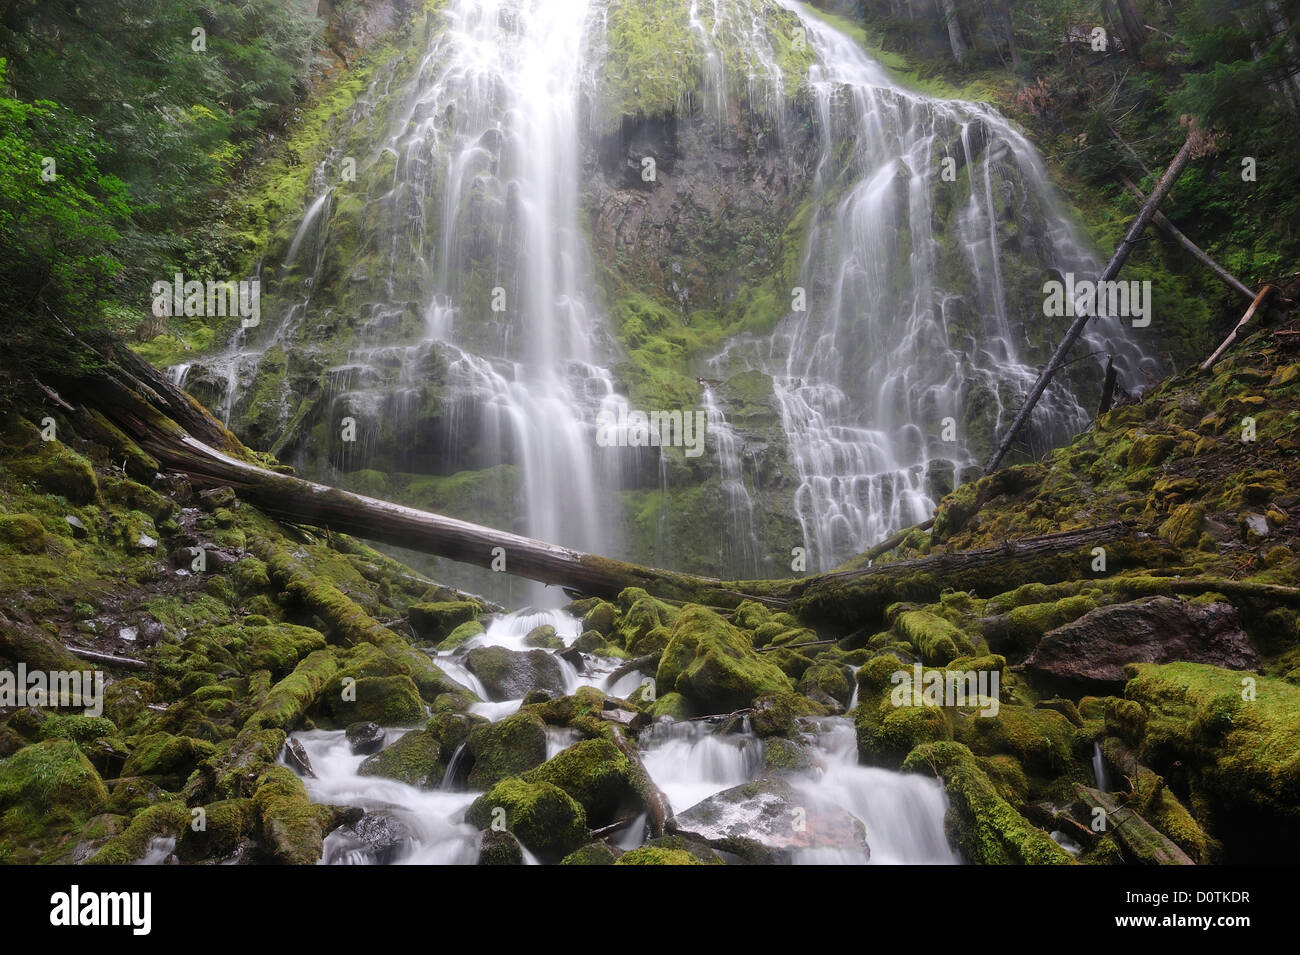 Kaskadierung, fließen, Wasserfall, Proxy fällt, Cascade Mountains, Willamette, National Forest, Kaskade, Oregon, USA, Vereinigte Staaten, bin Stockfoto